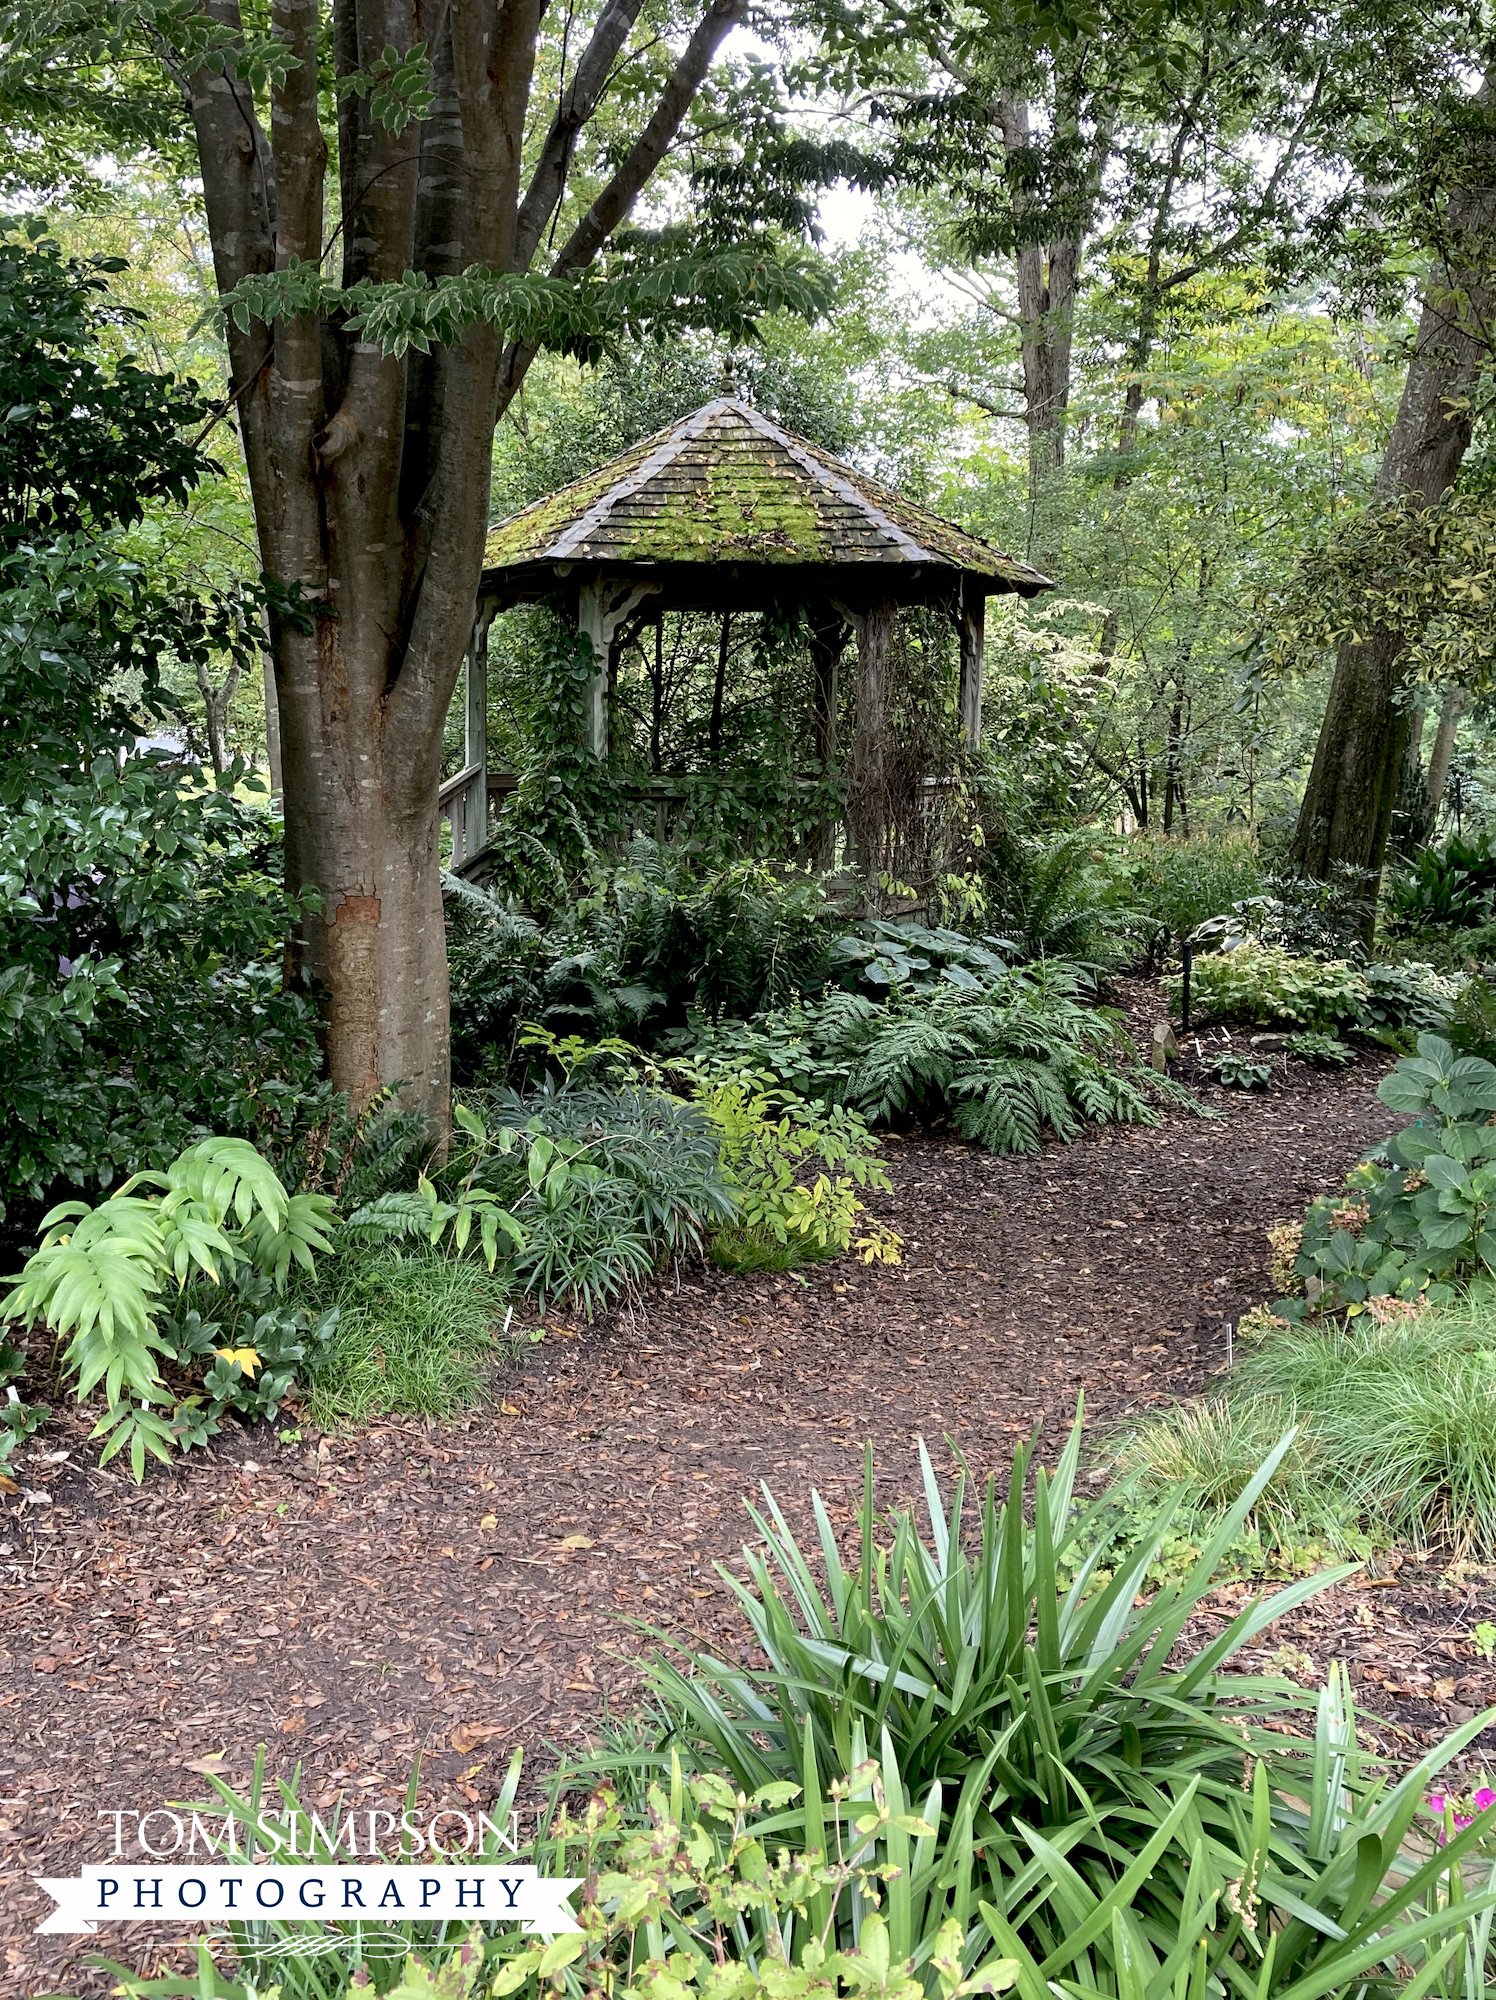 gazebo in botanic garden surrounded by plants